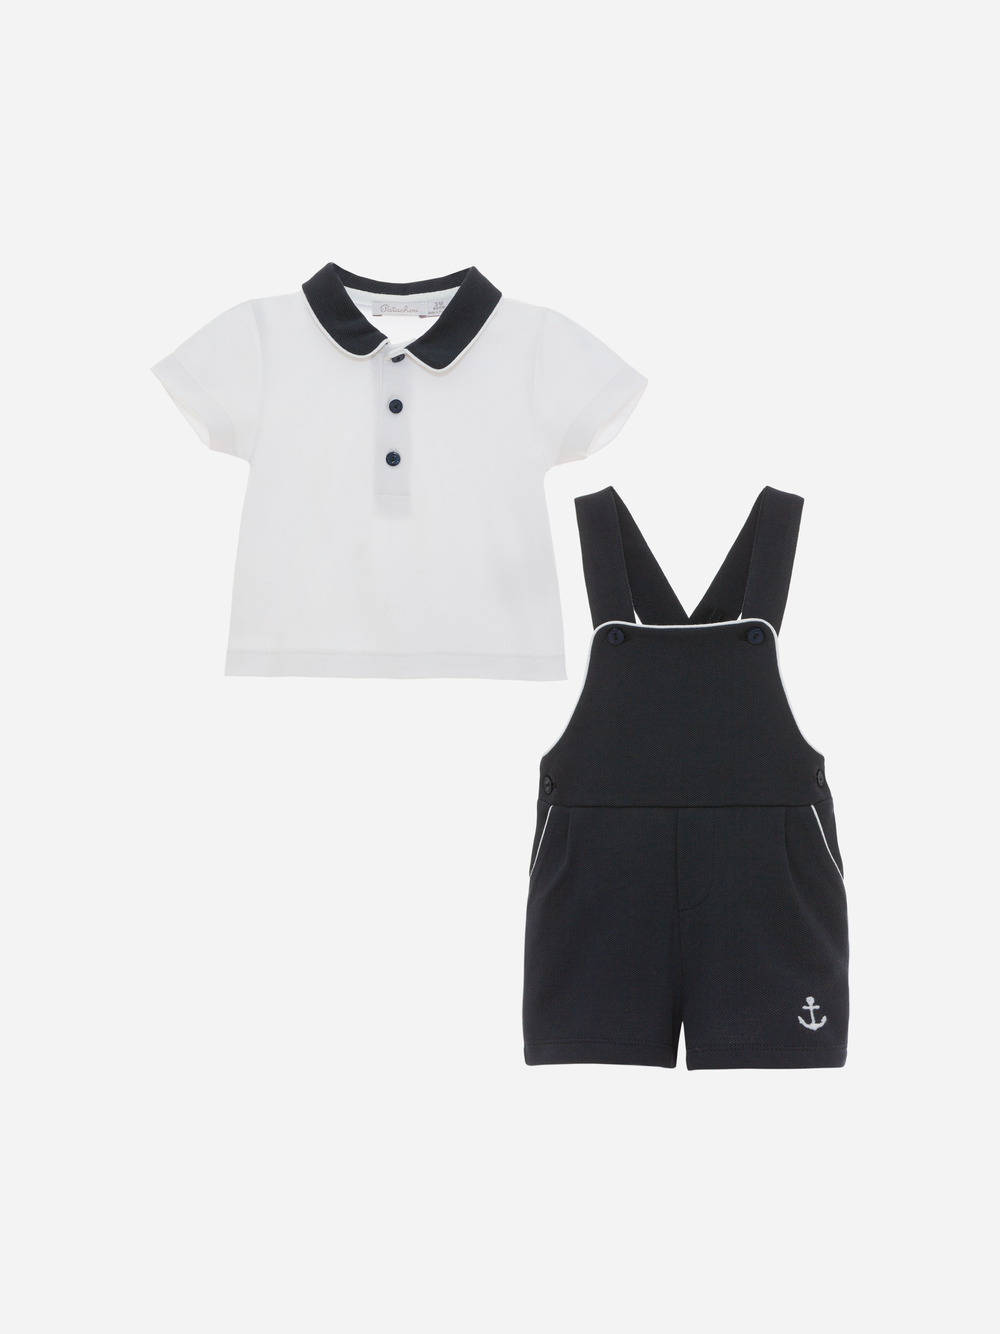 White Piquet T-shirt and Navy Piquet Shorts